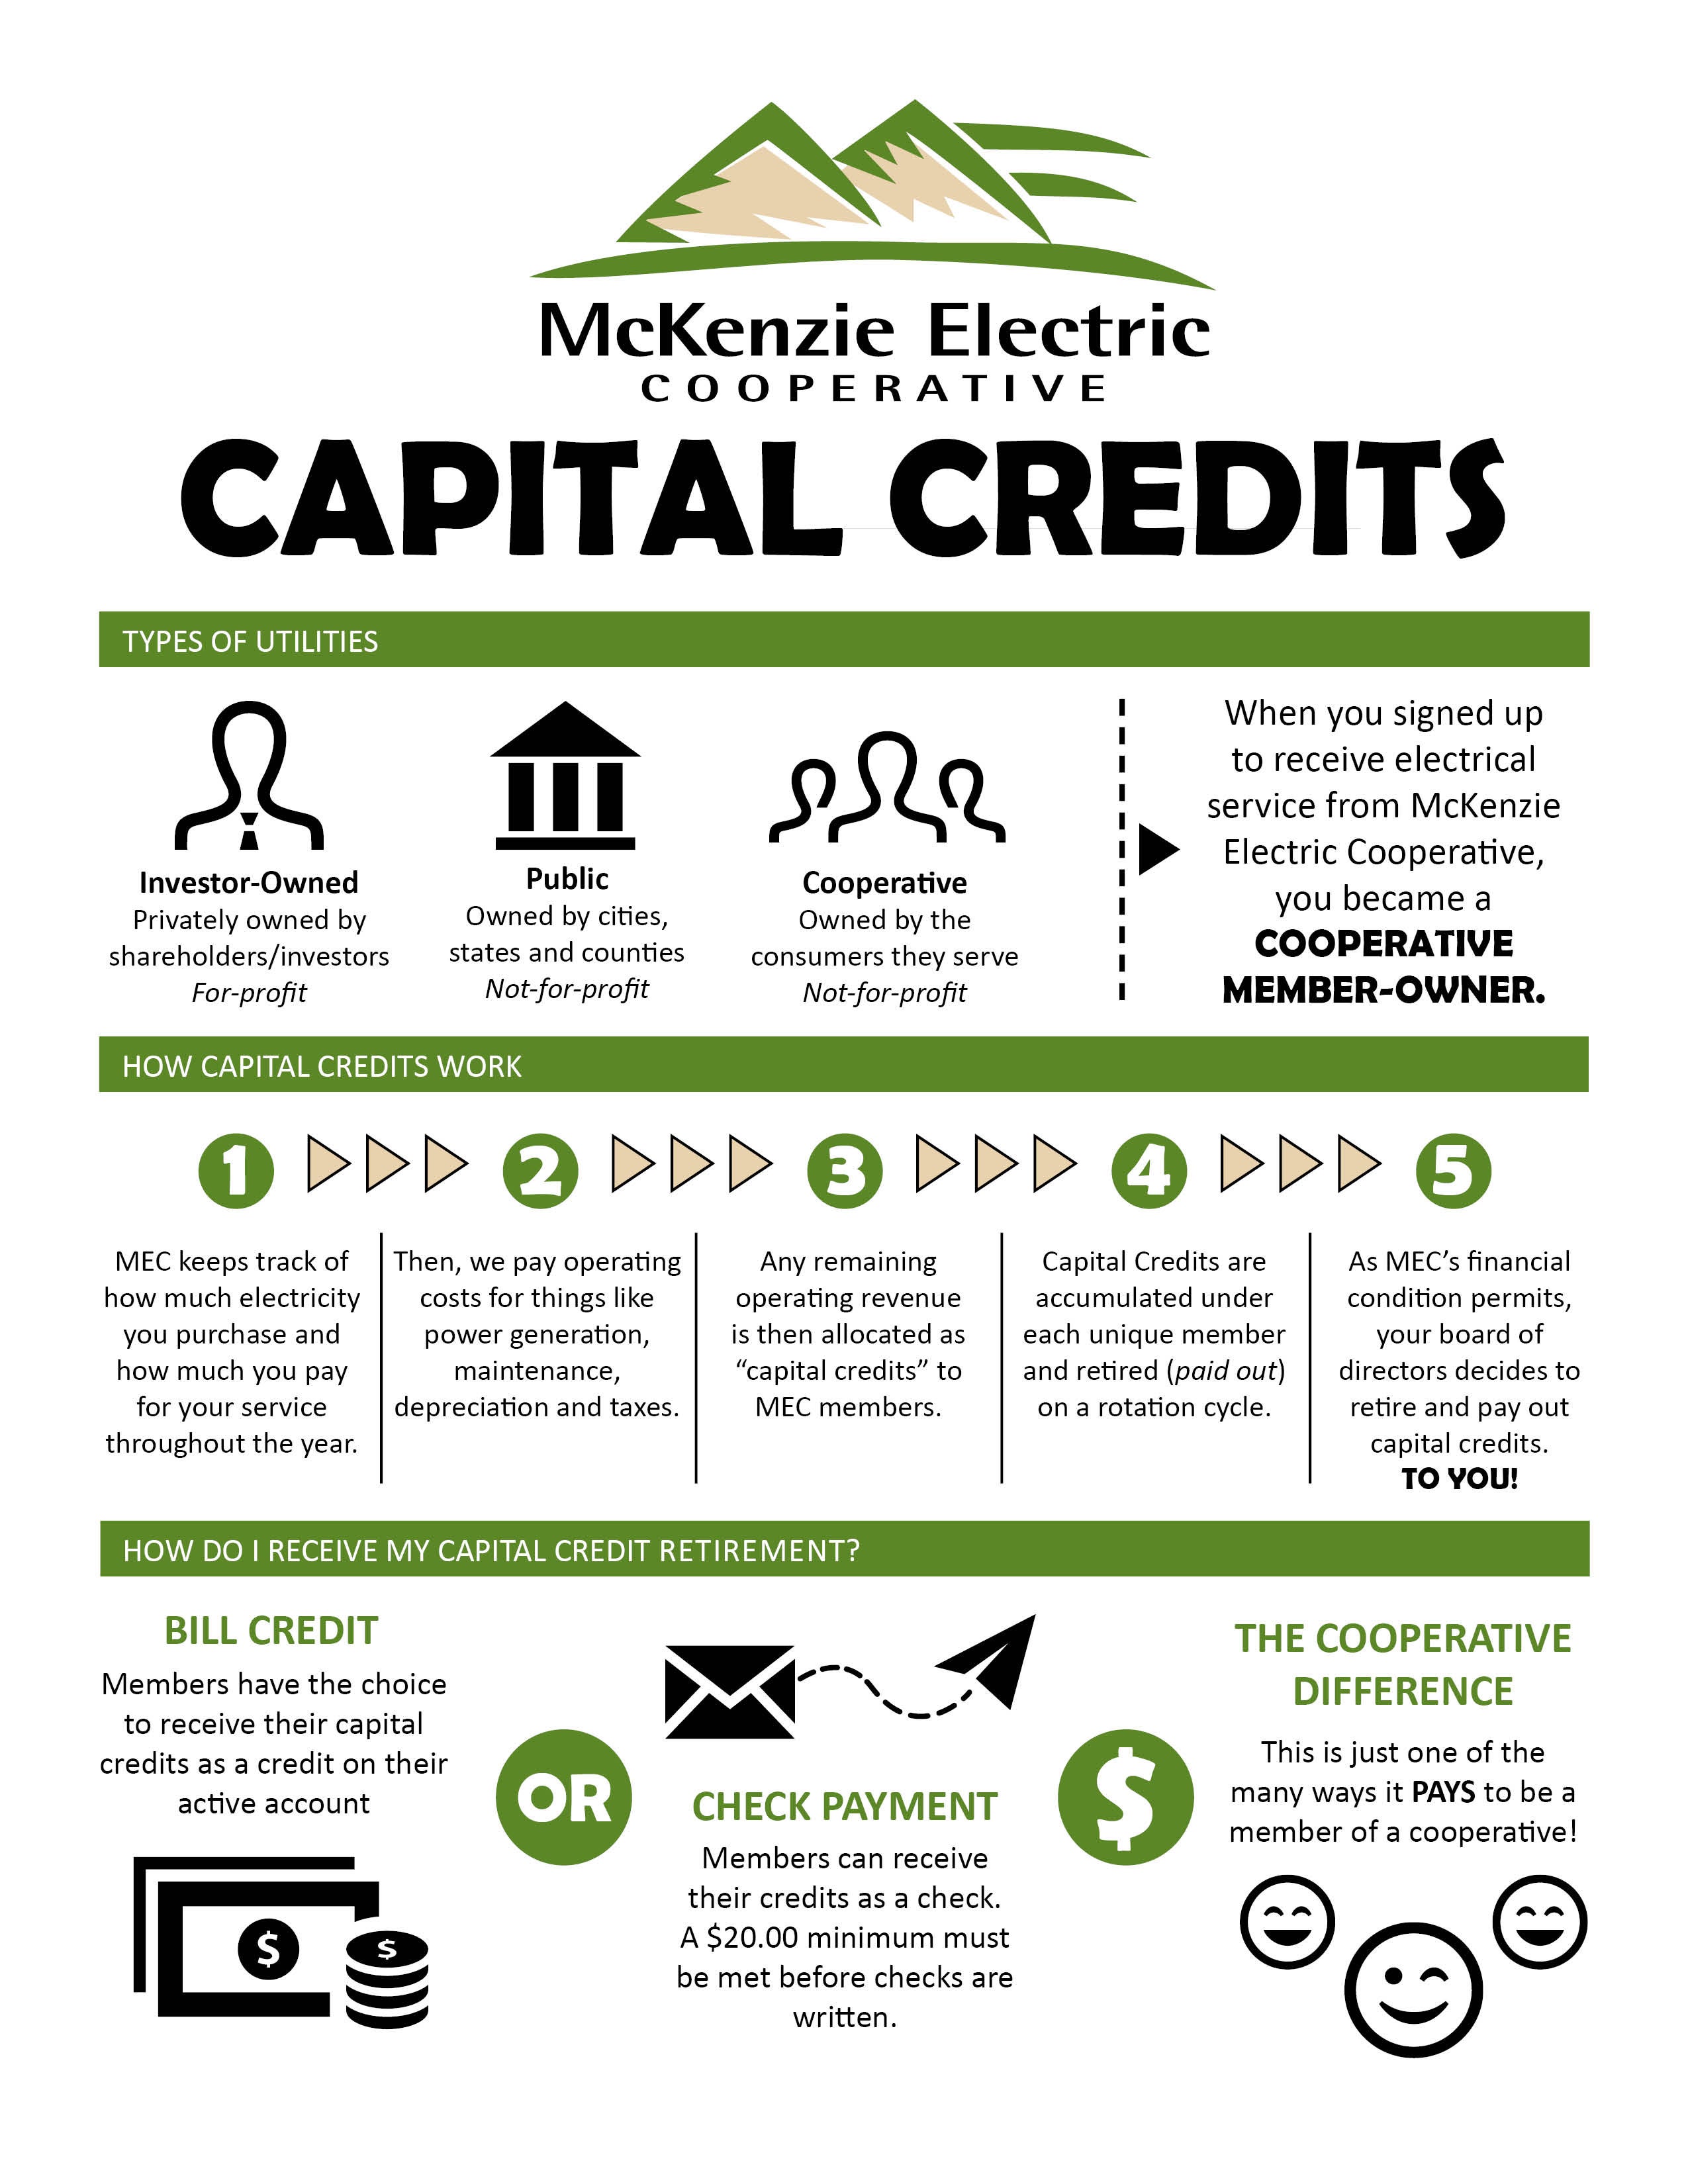 Capital Credits